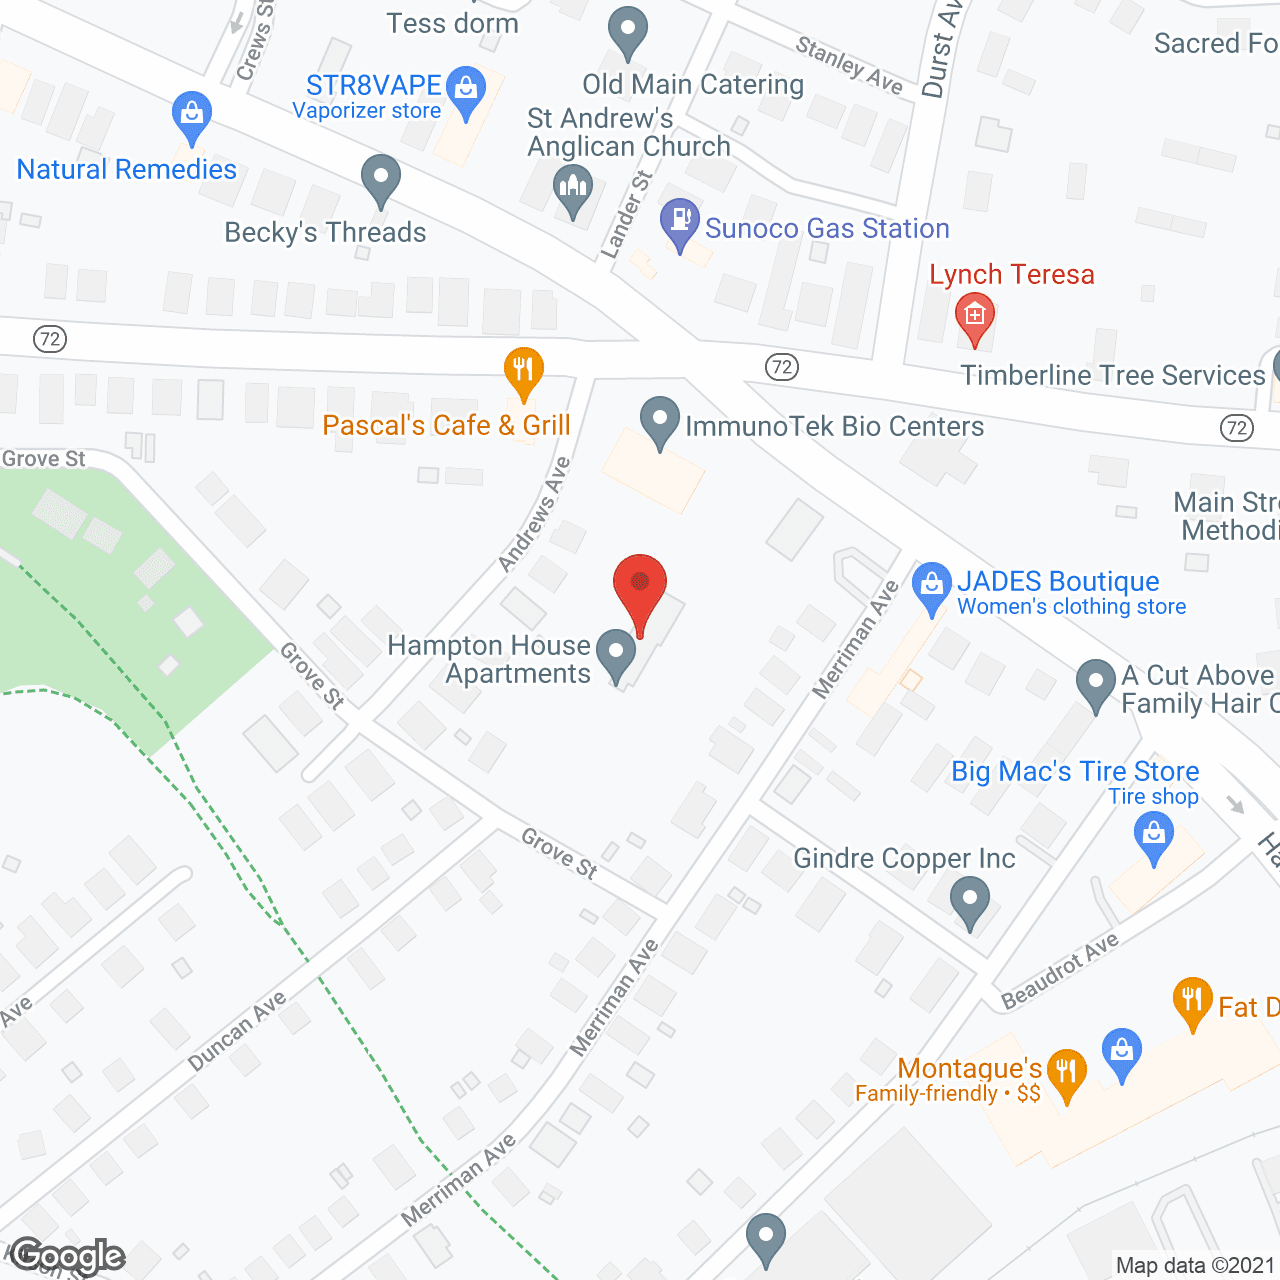 Hampton House Apartments in google map